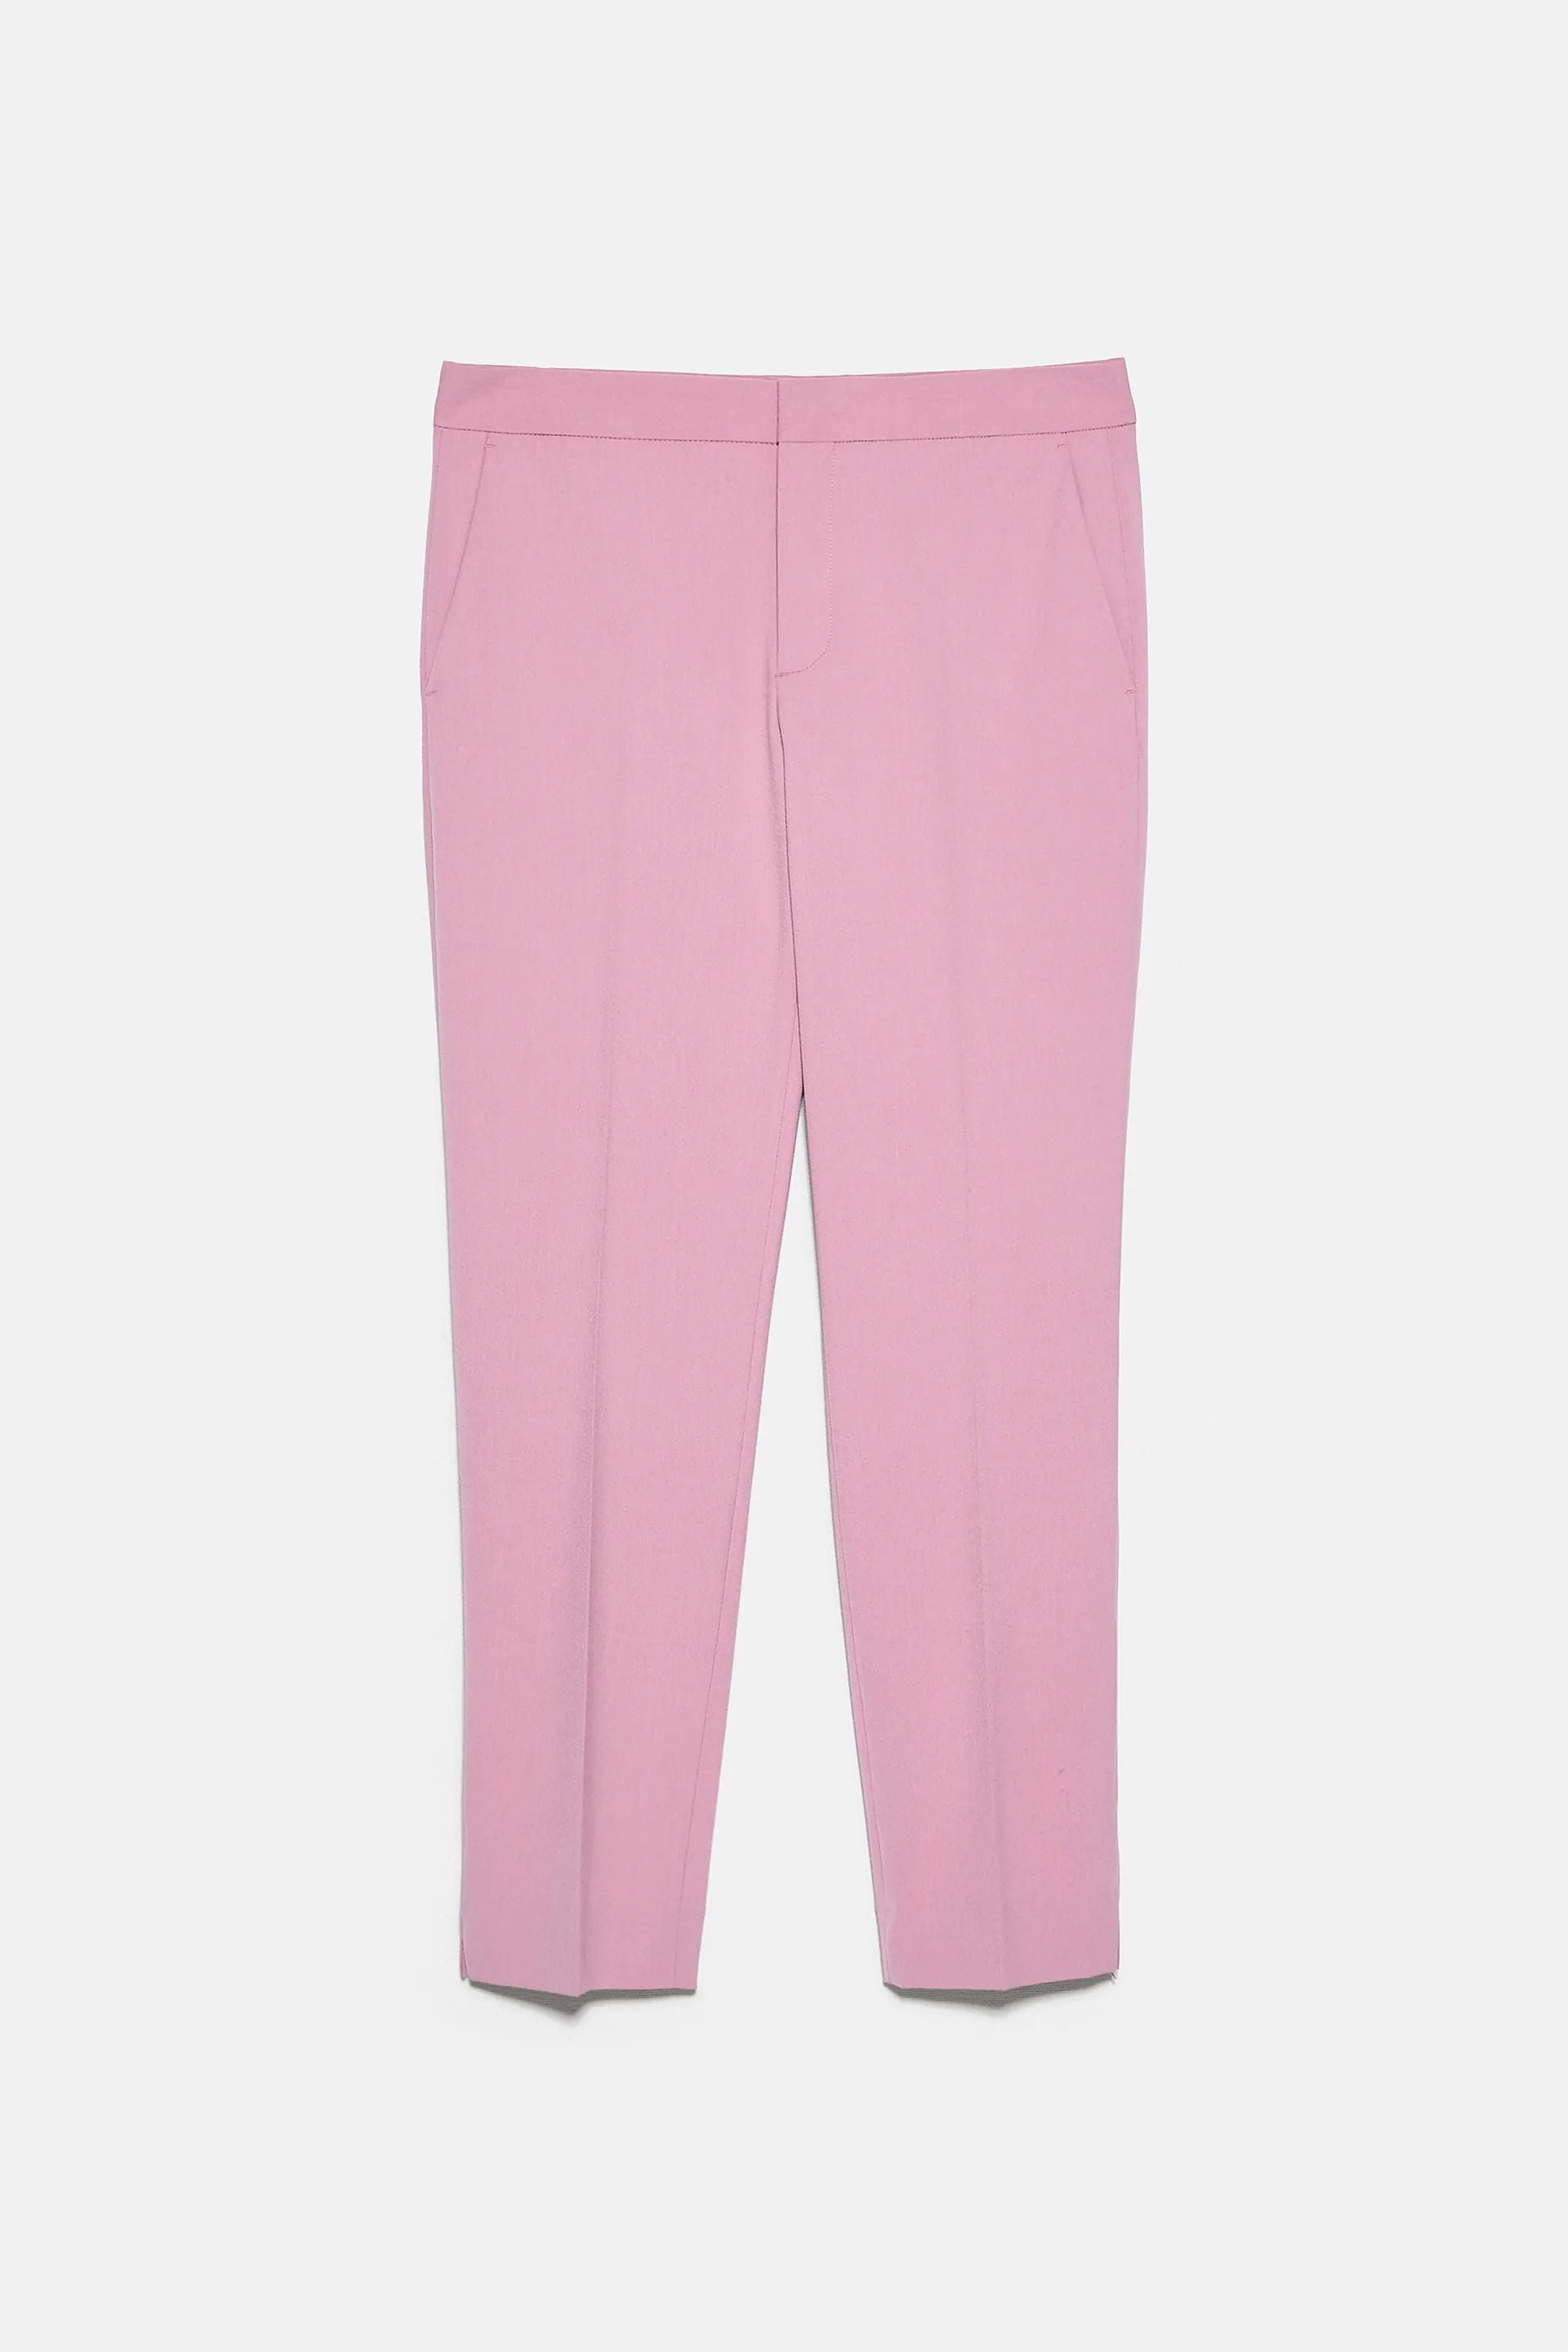 Quần Tây Nữ Zara Cigarette Pants Pink